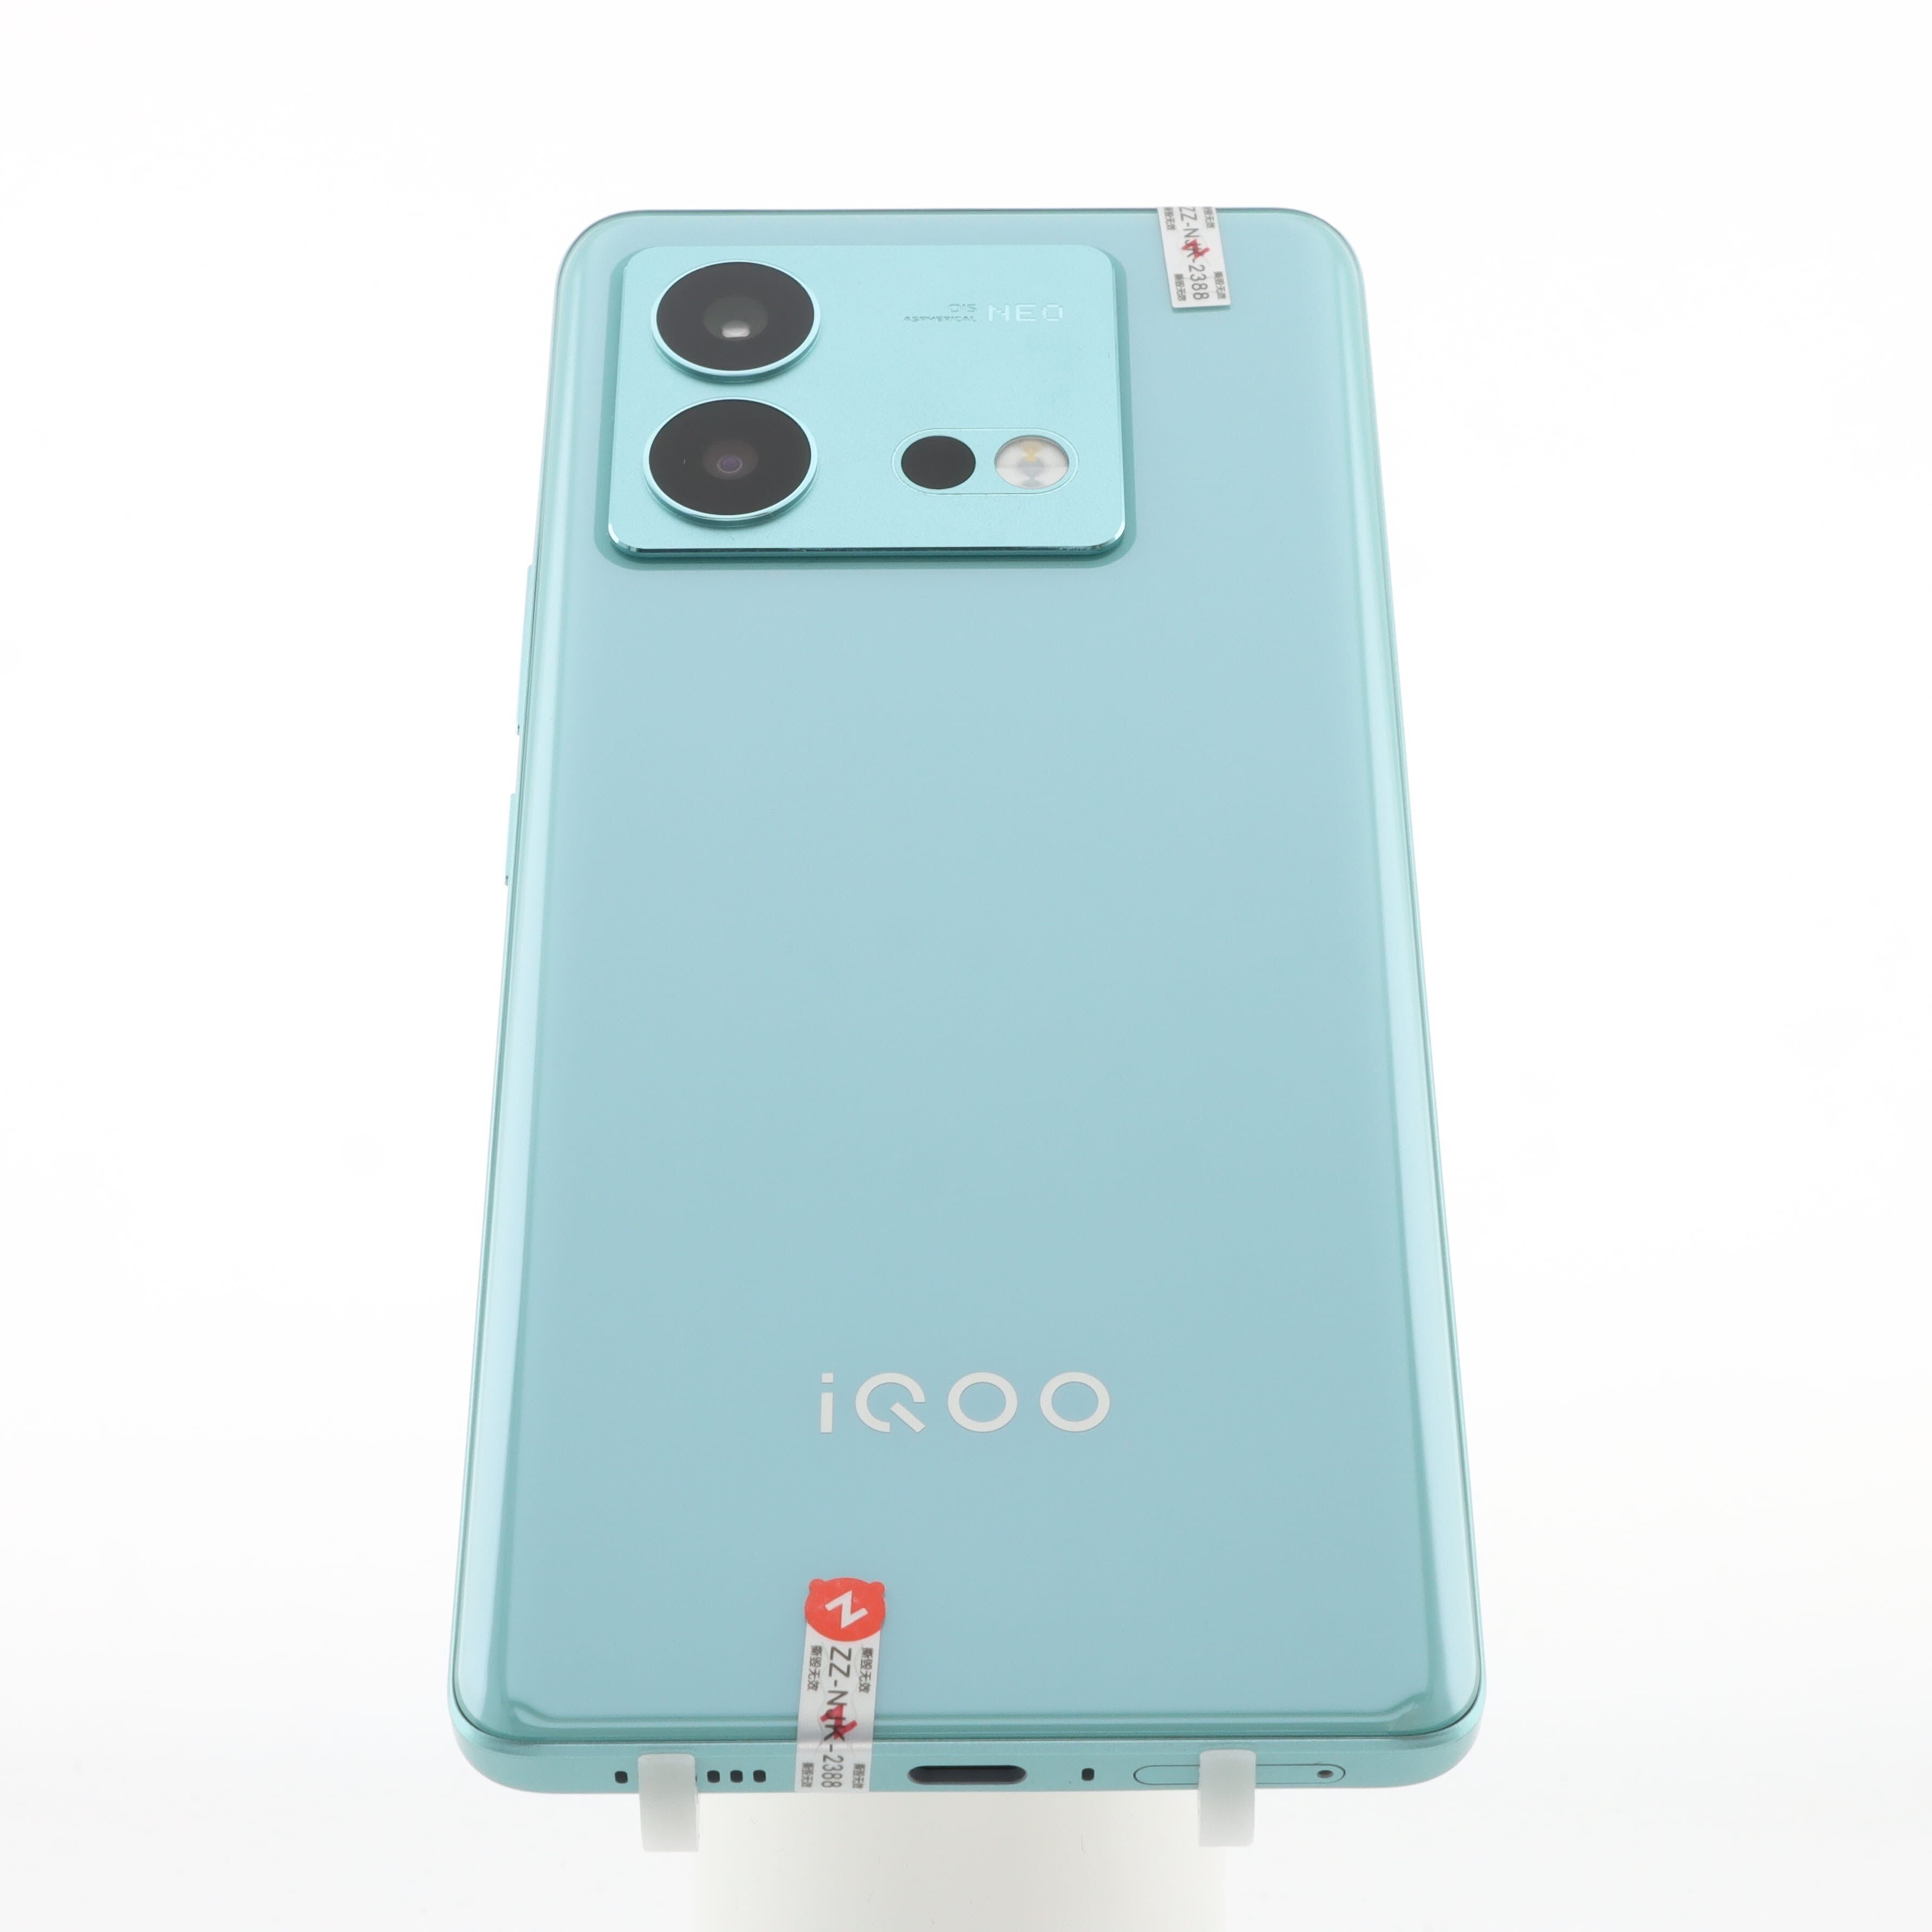 iQOO Neo 8 Pro 5G